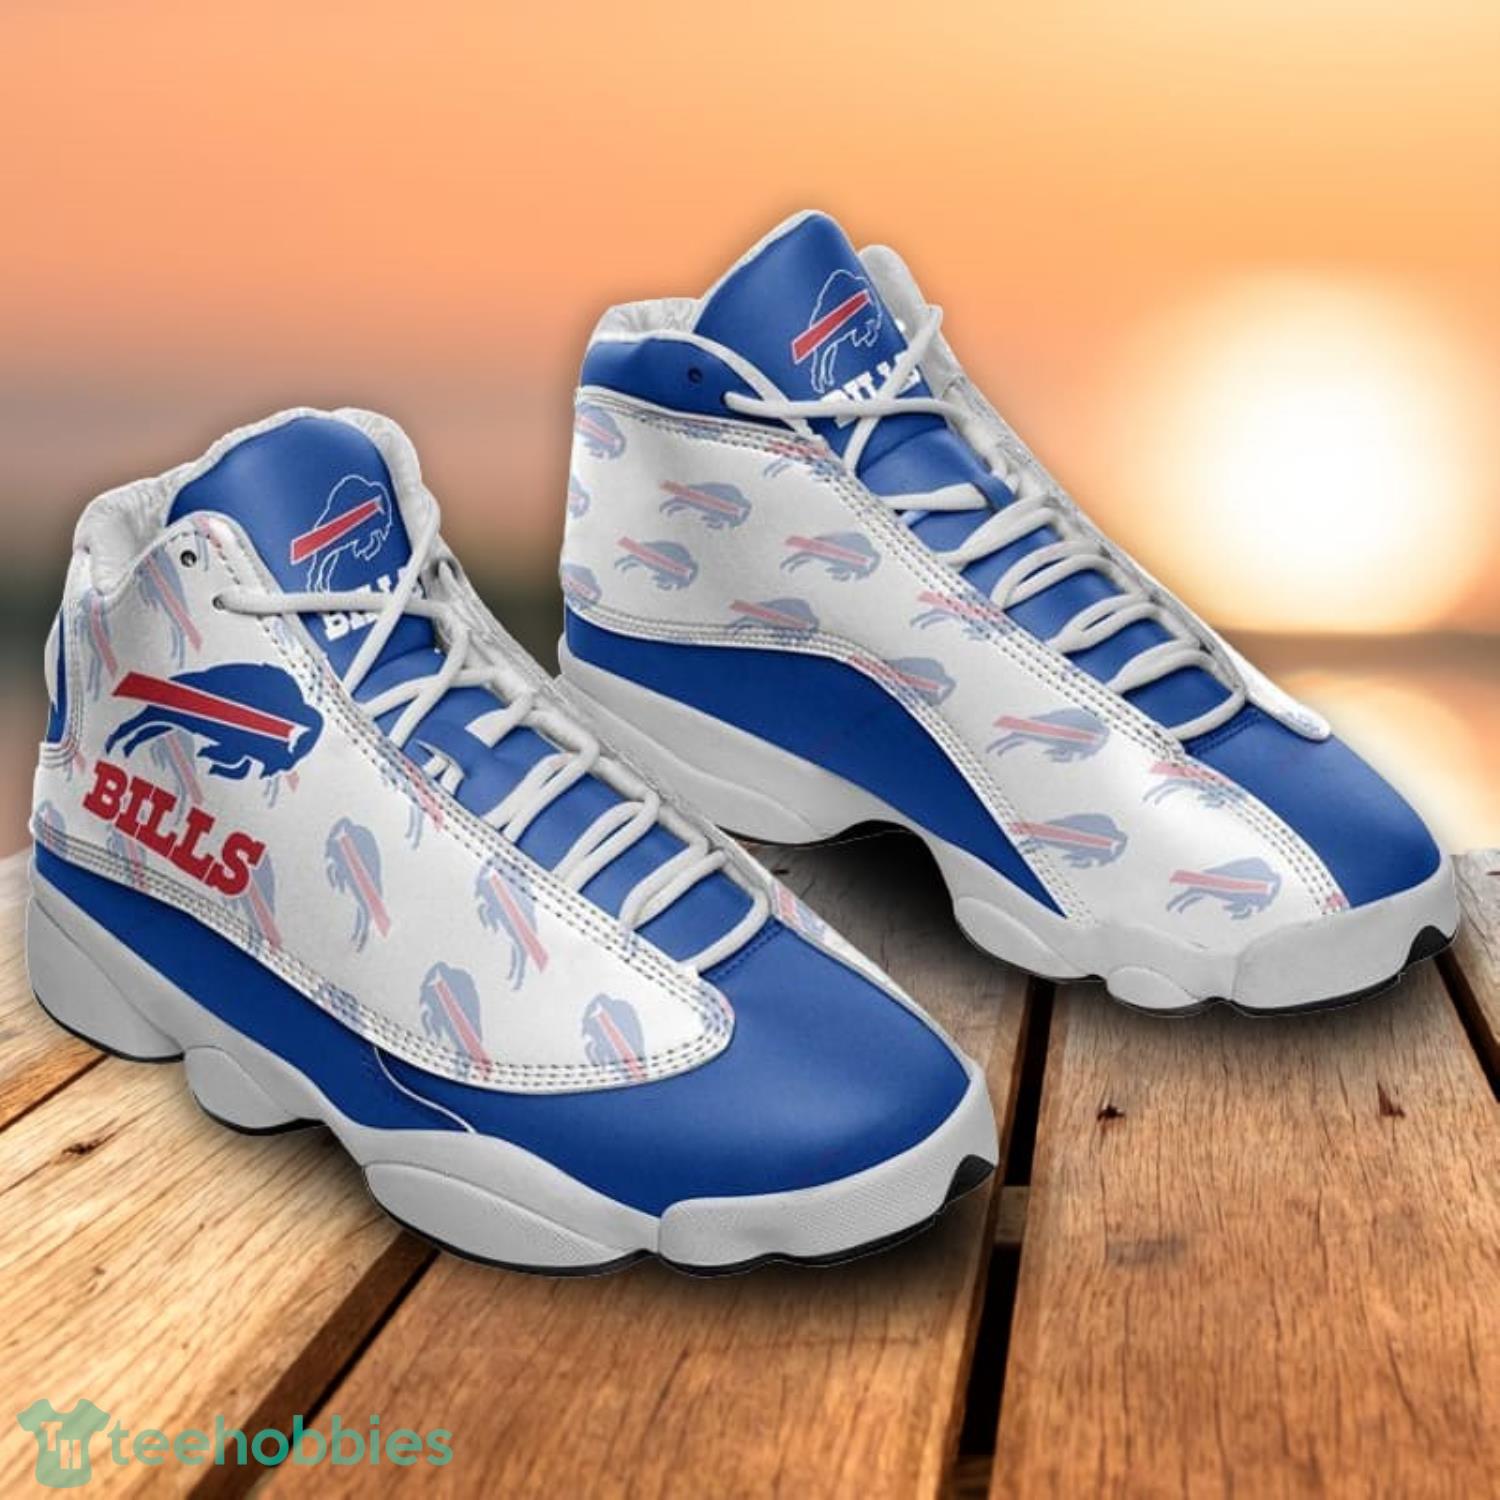 Buffalo Bills Team Air Jordan 13 Shoes Custom Sneakers For Fans Product Photo 1